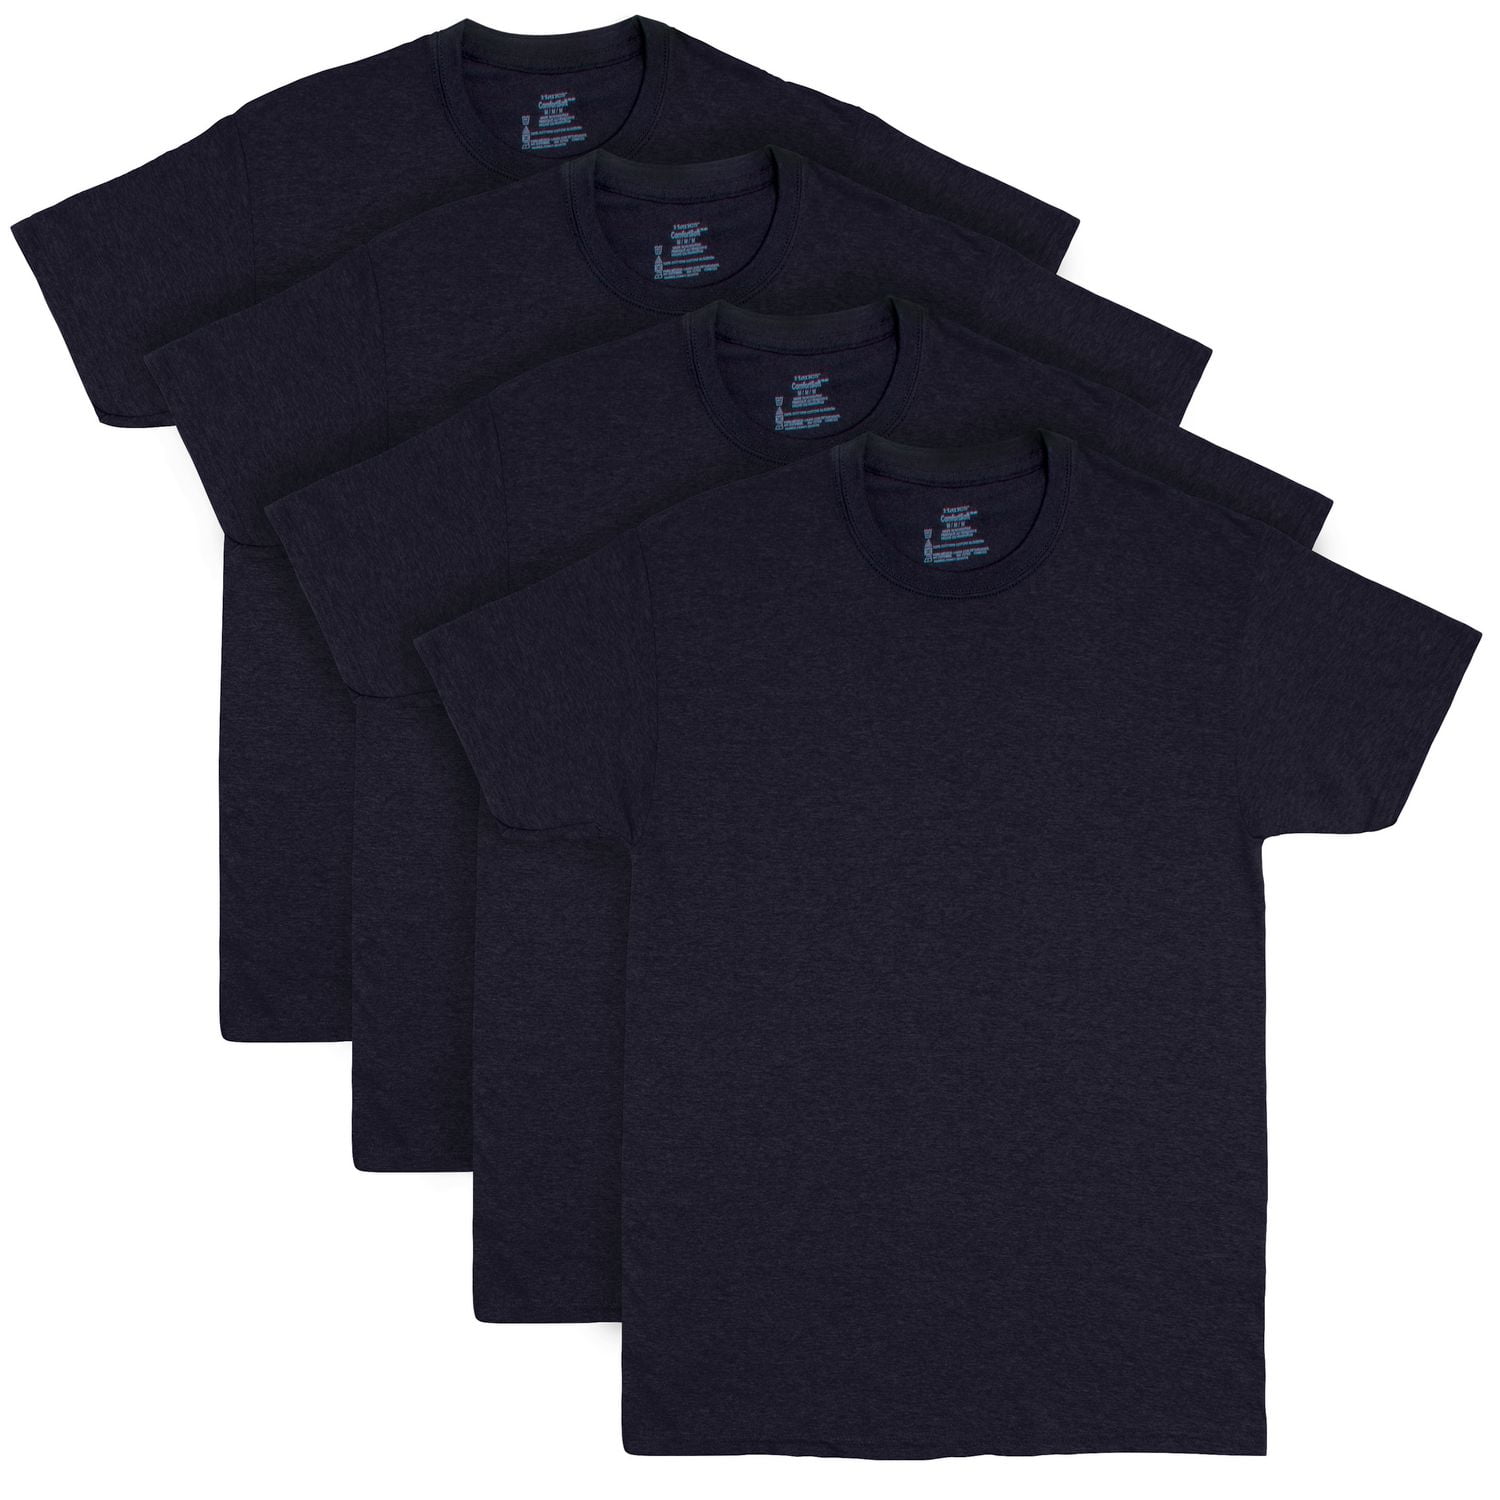 Hanes ComfortSoft Toddler Crewneck T-Shirt 3-Pack Black